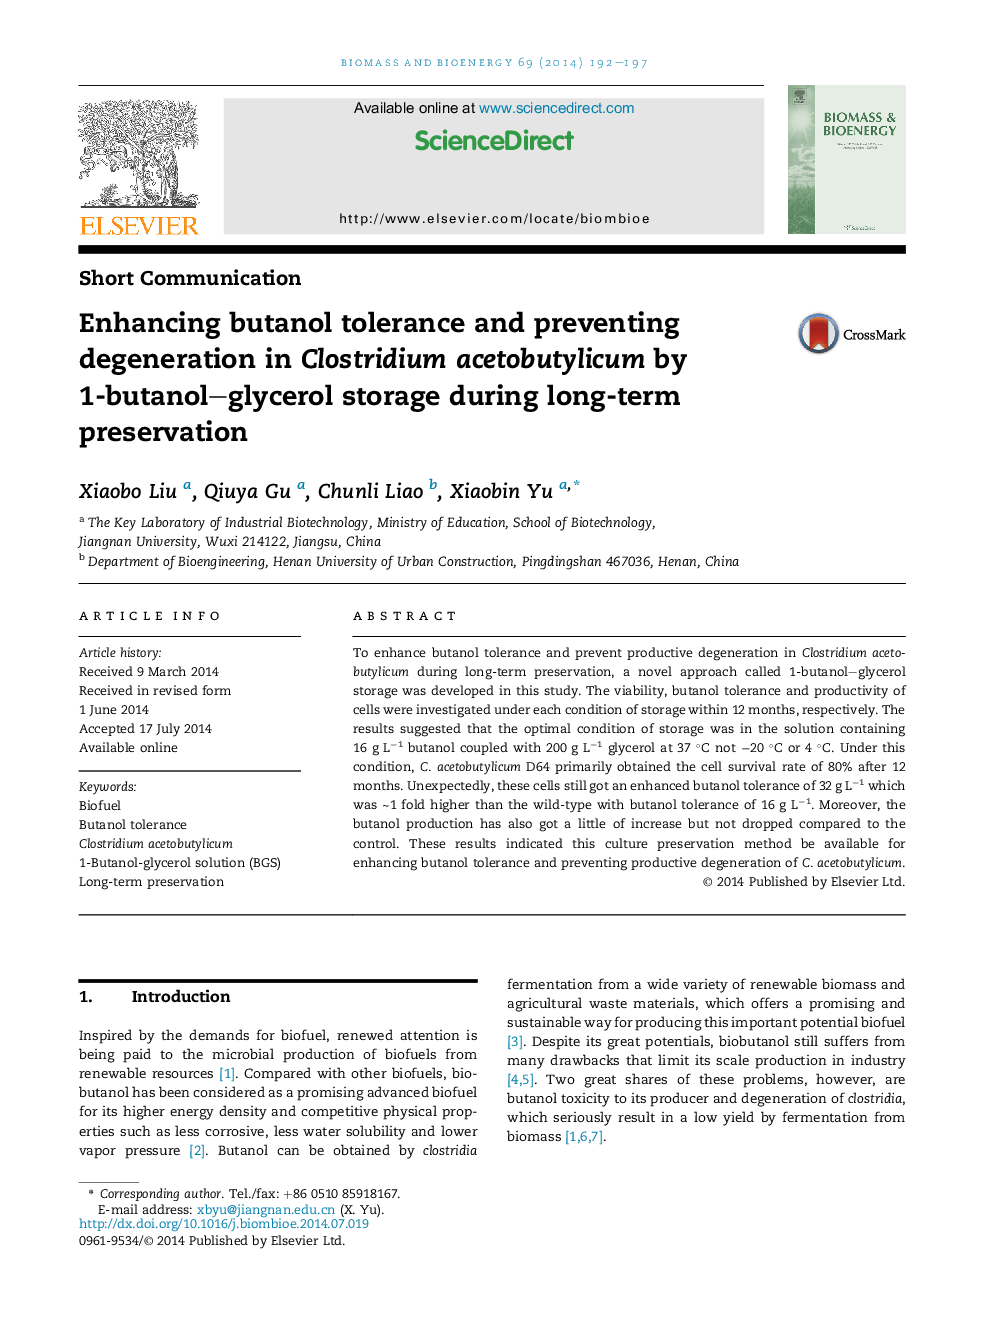 Enhancing butanol tolerance and preventing degeneration in Clostridium acetobutylicum by 1-butanol-glycerol storage during long-term preservation